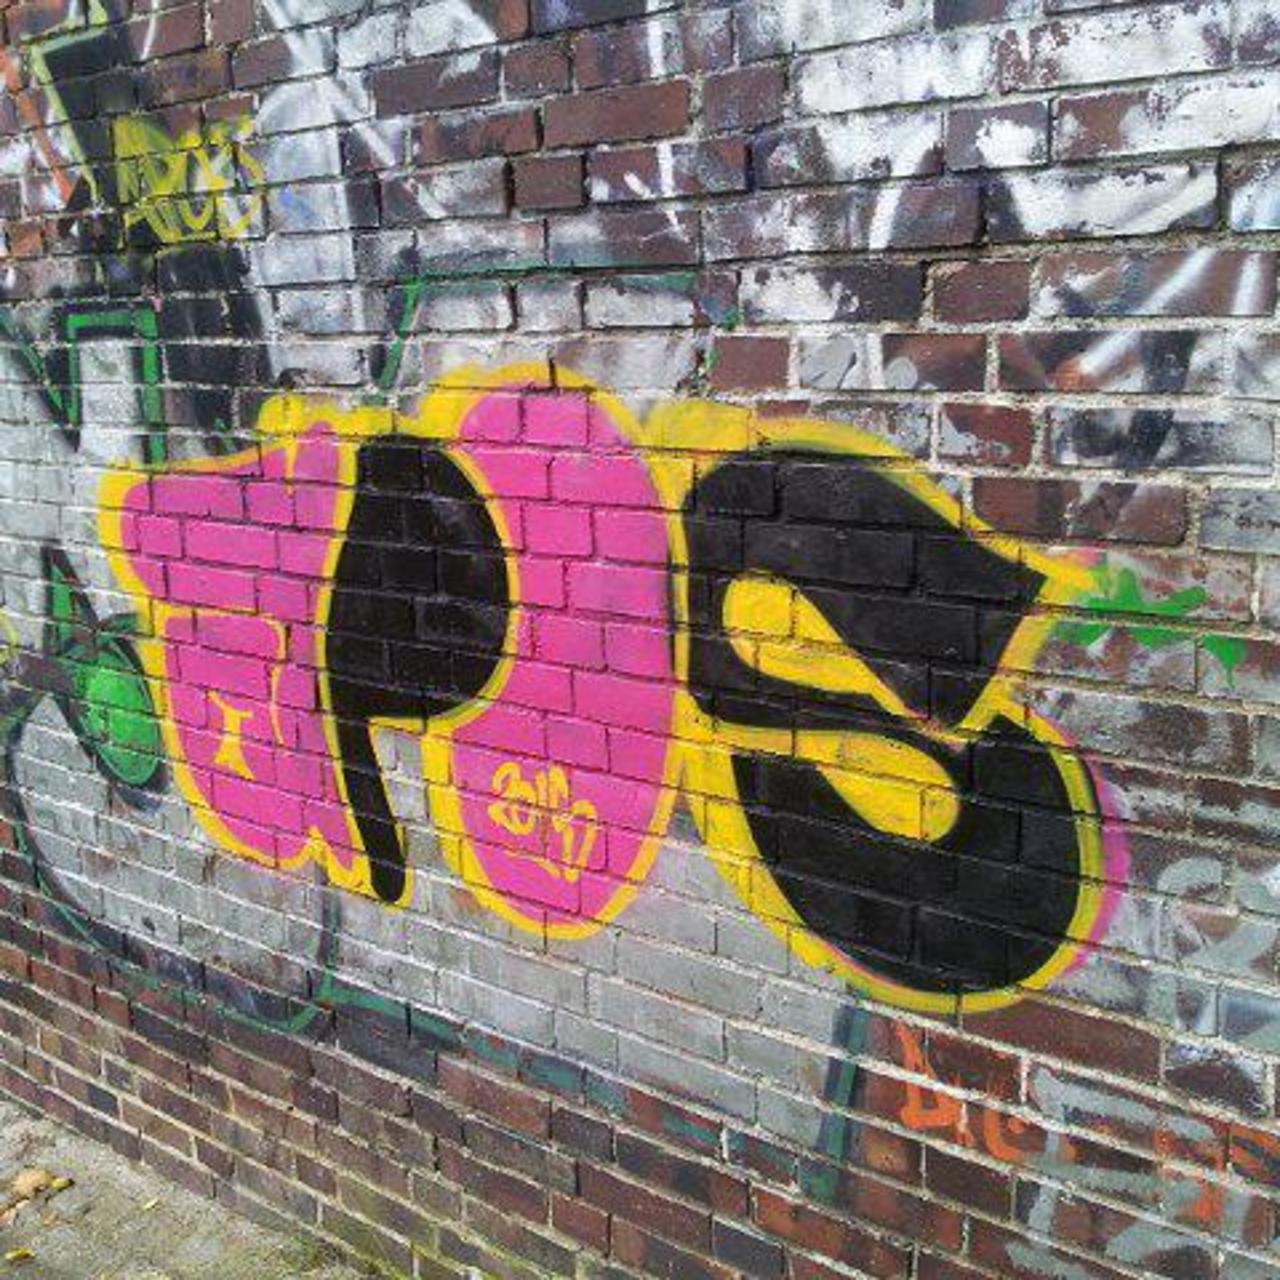 RT @artpushr: via #apos_crew "http://bit.ly/1JSwlMs" #graffiti #streetart http://t.co/Op7mQ9sLtW